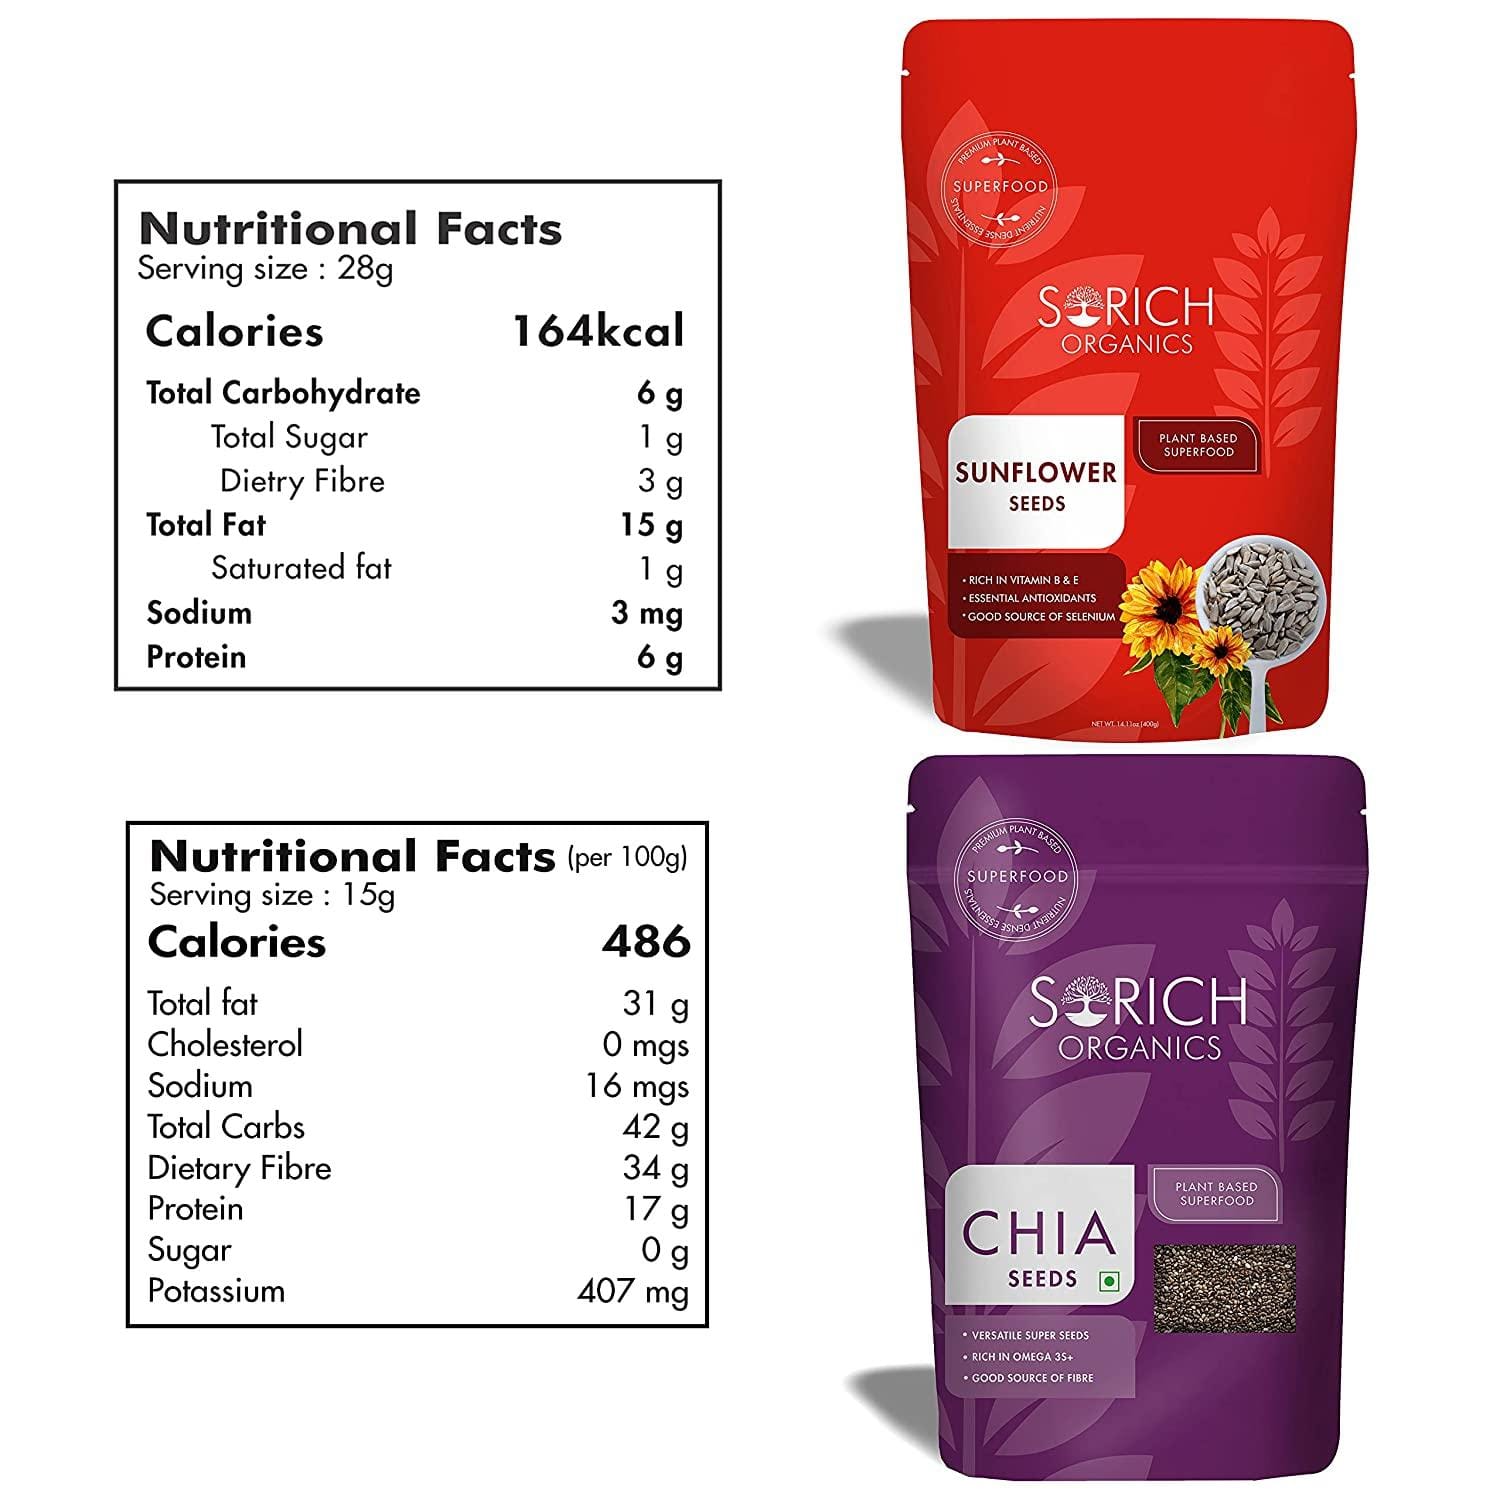 Chia Seeds 250 Gm & Sunflower Seeds 400 Gm - 650 Gm - Sorichorganics